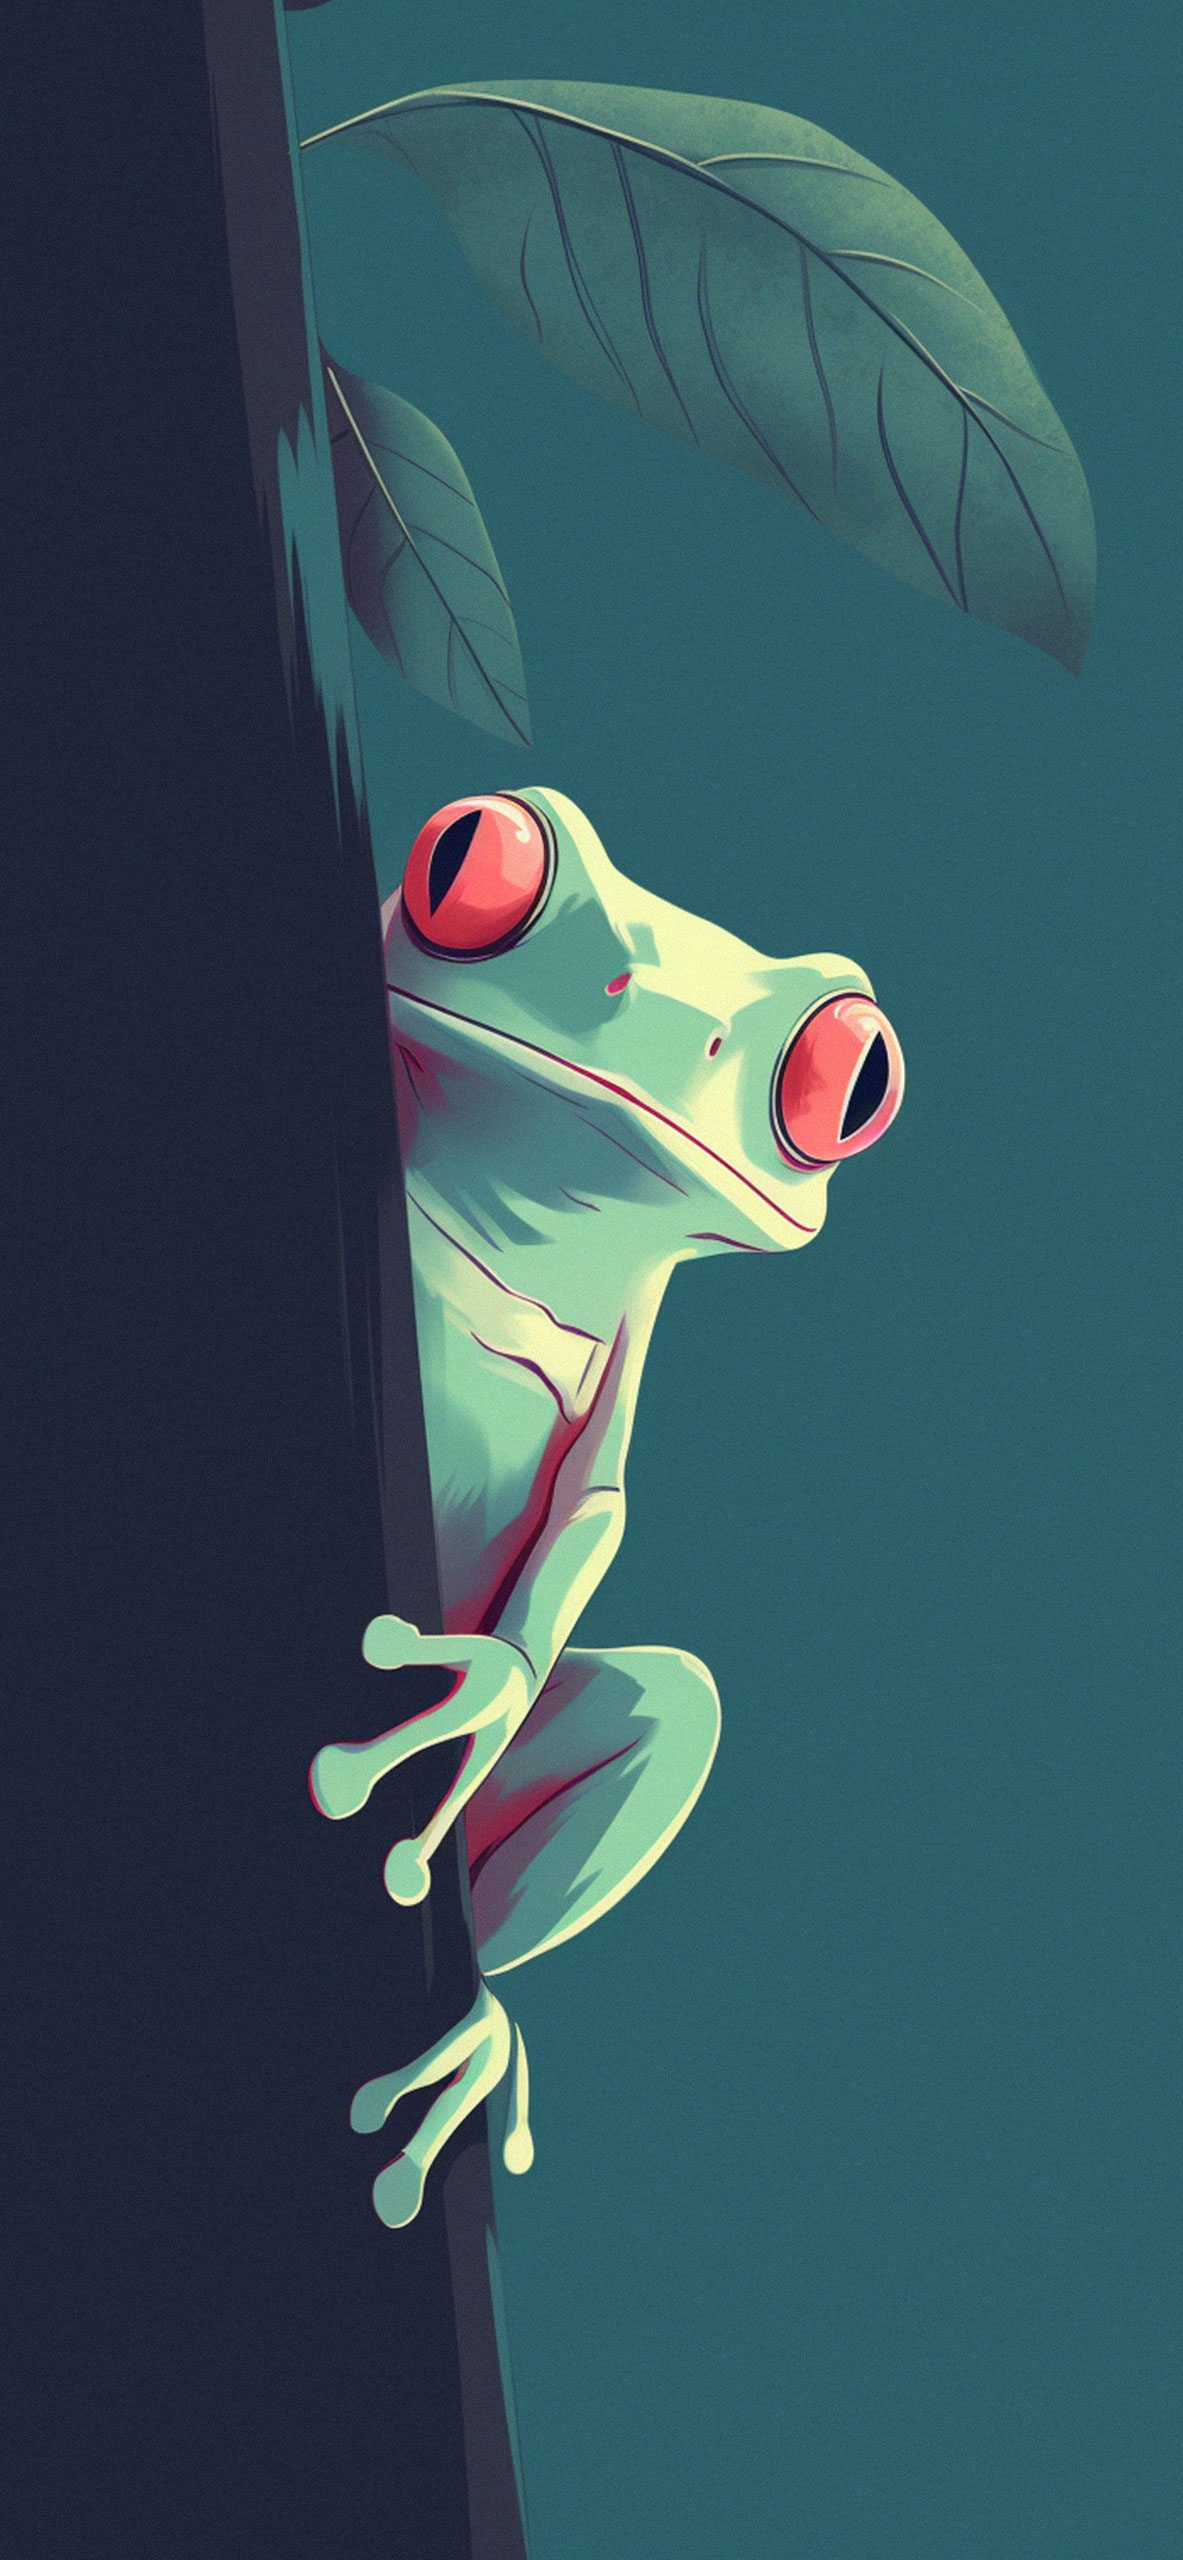 Frog art wallpaper